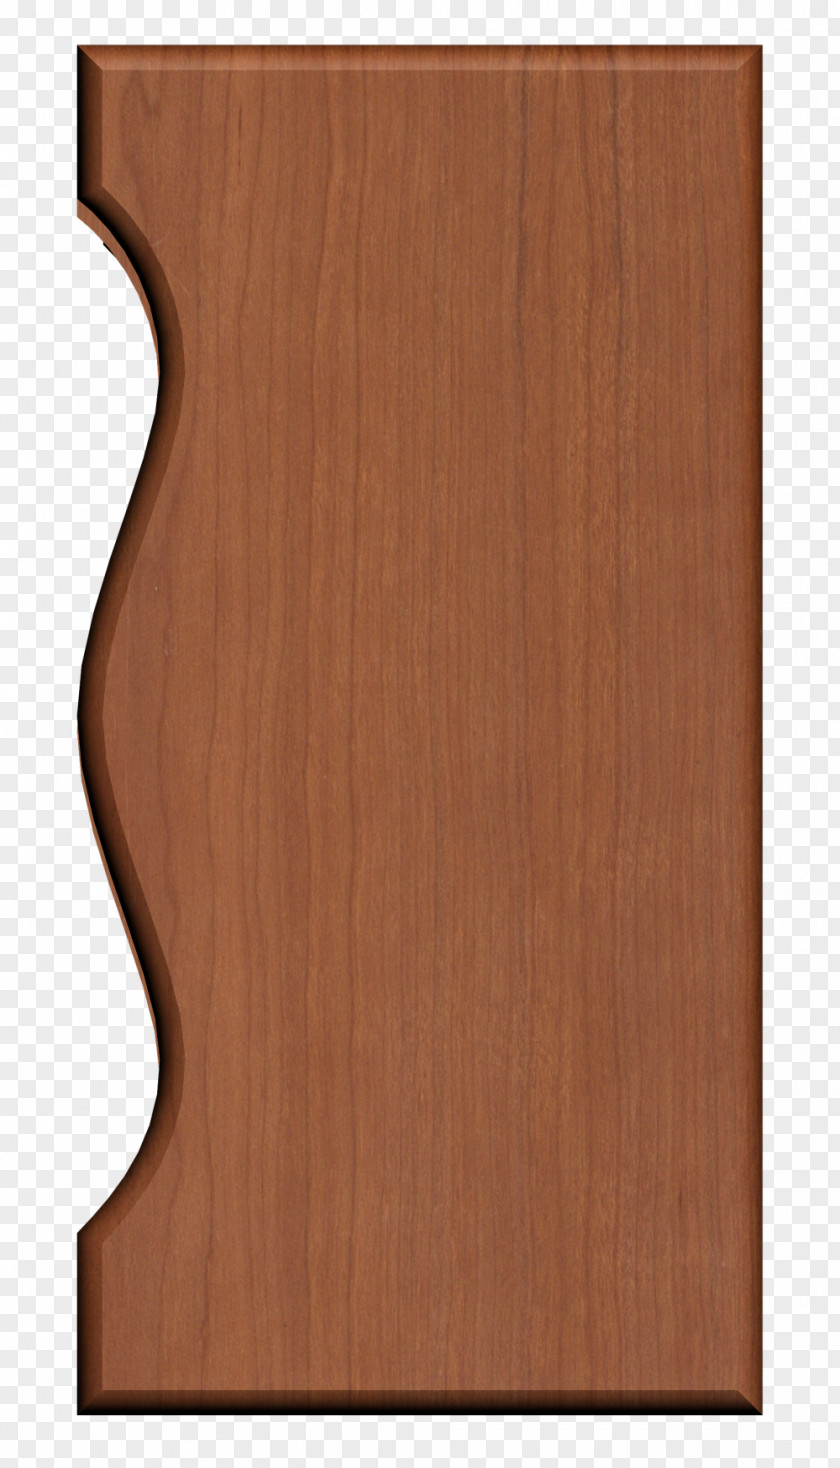 Hardwood Varnish Wood Stain Rectangle PNG